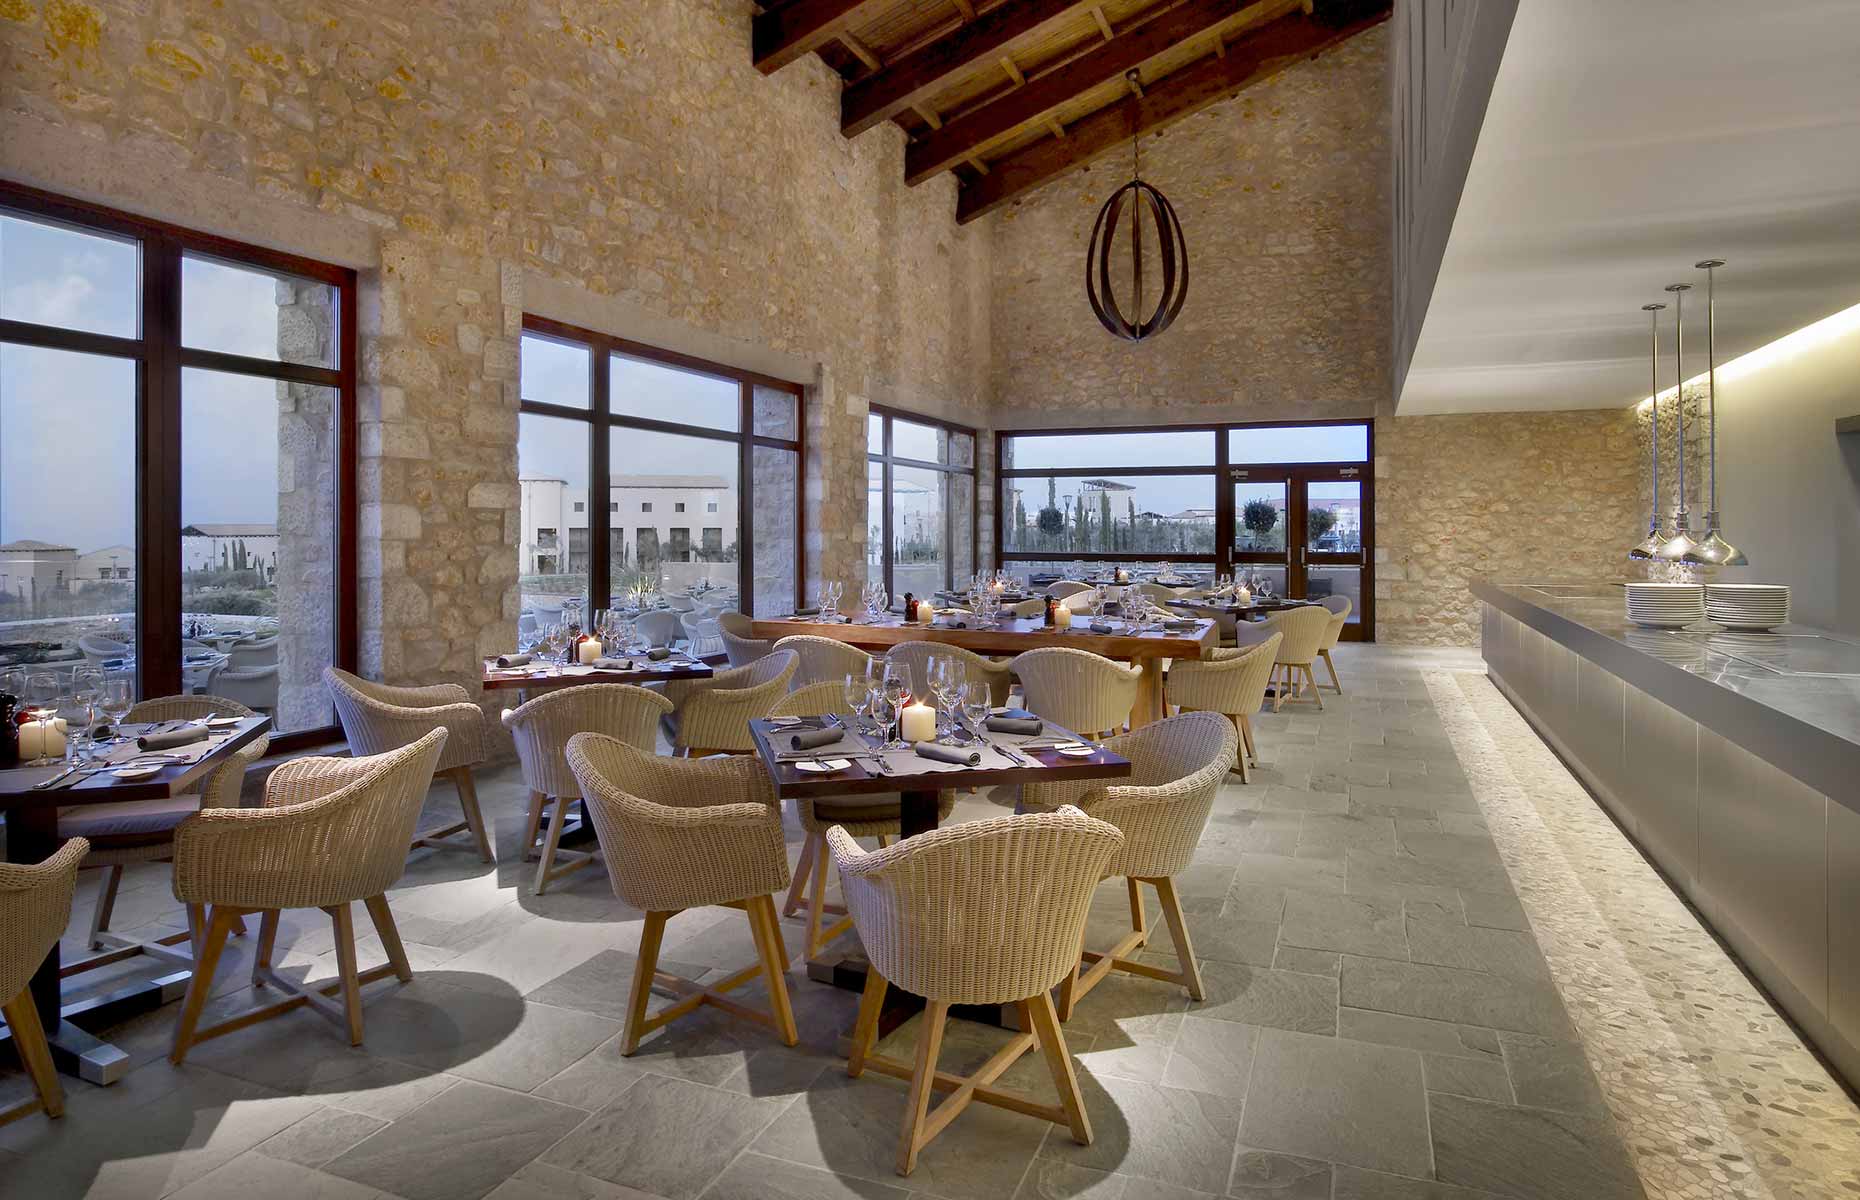 Club House du golf et Restaurant Flame, Westin Resort Costa Navarino - Hôtel Grèce, Péloponnèse